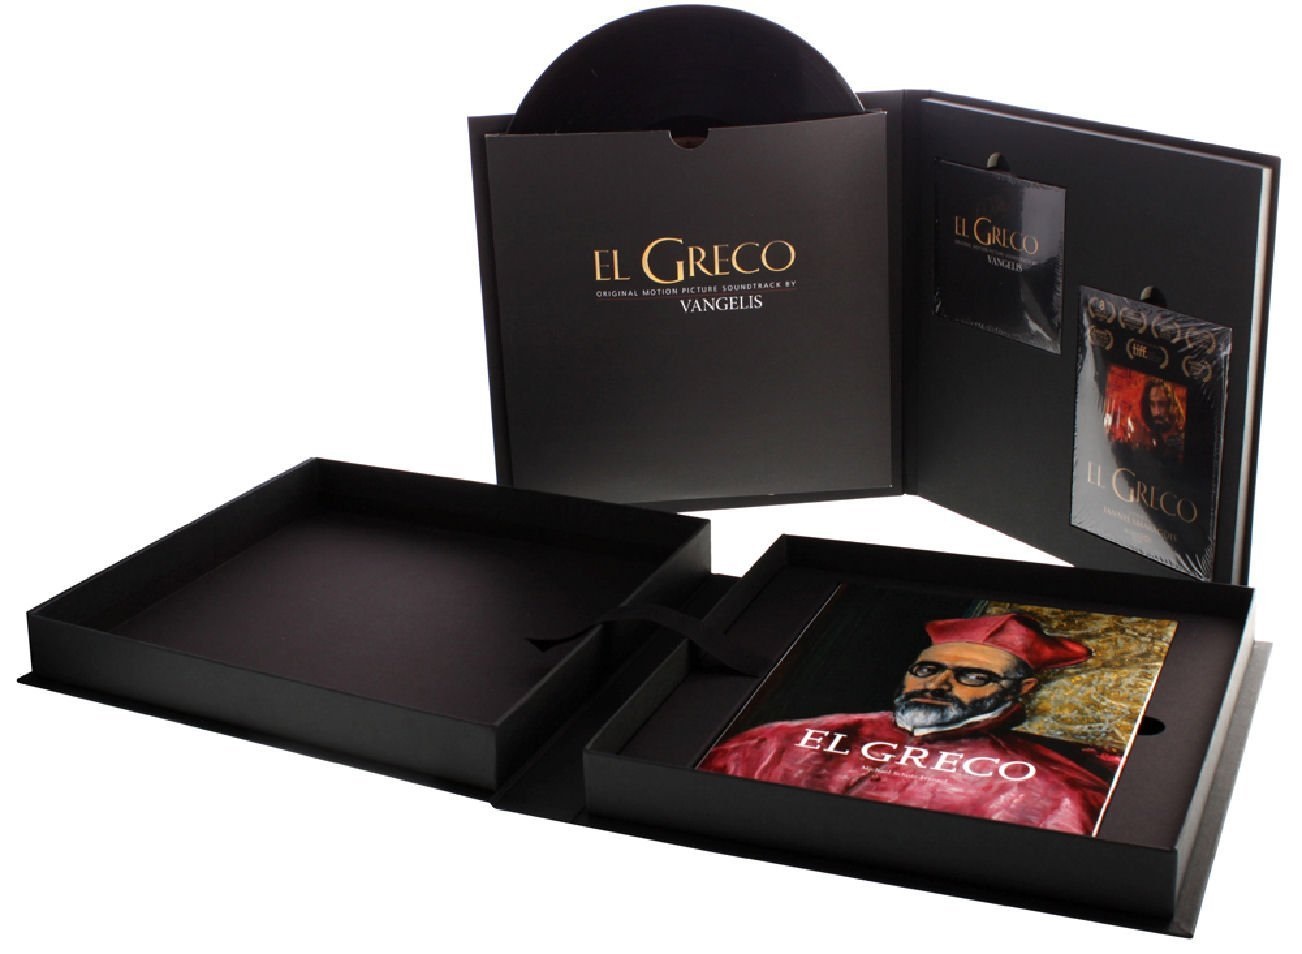 El Greco: The Anniversary Edition [Deluxe Ultimate Edition]